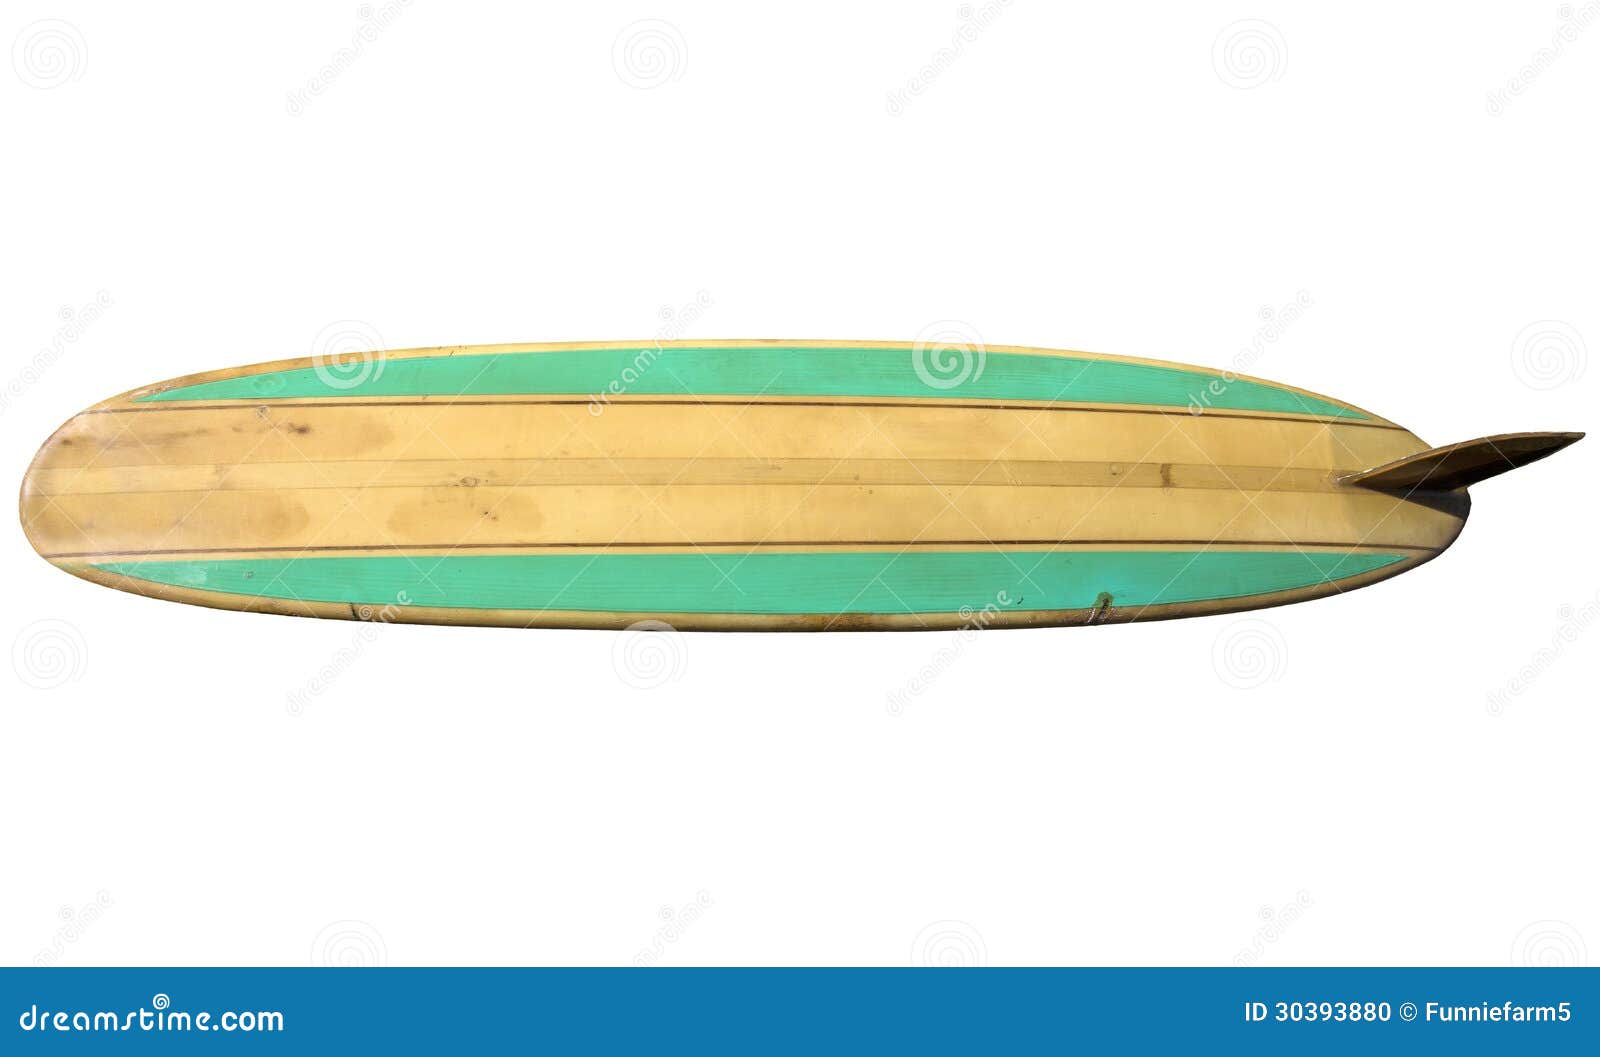 vintage surfboard  on white